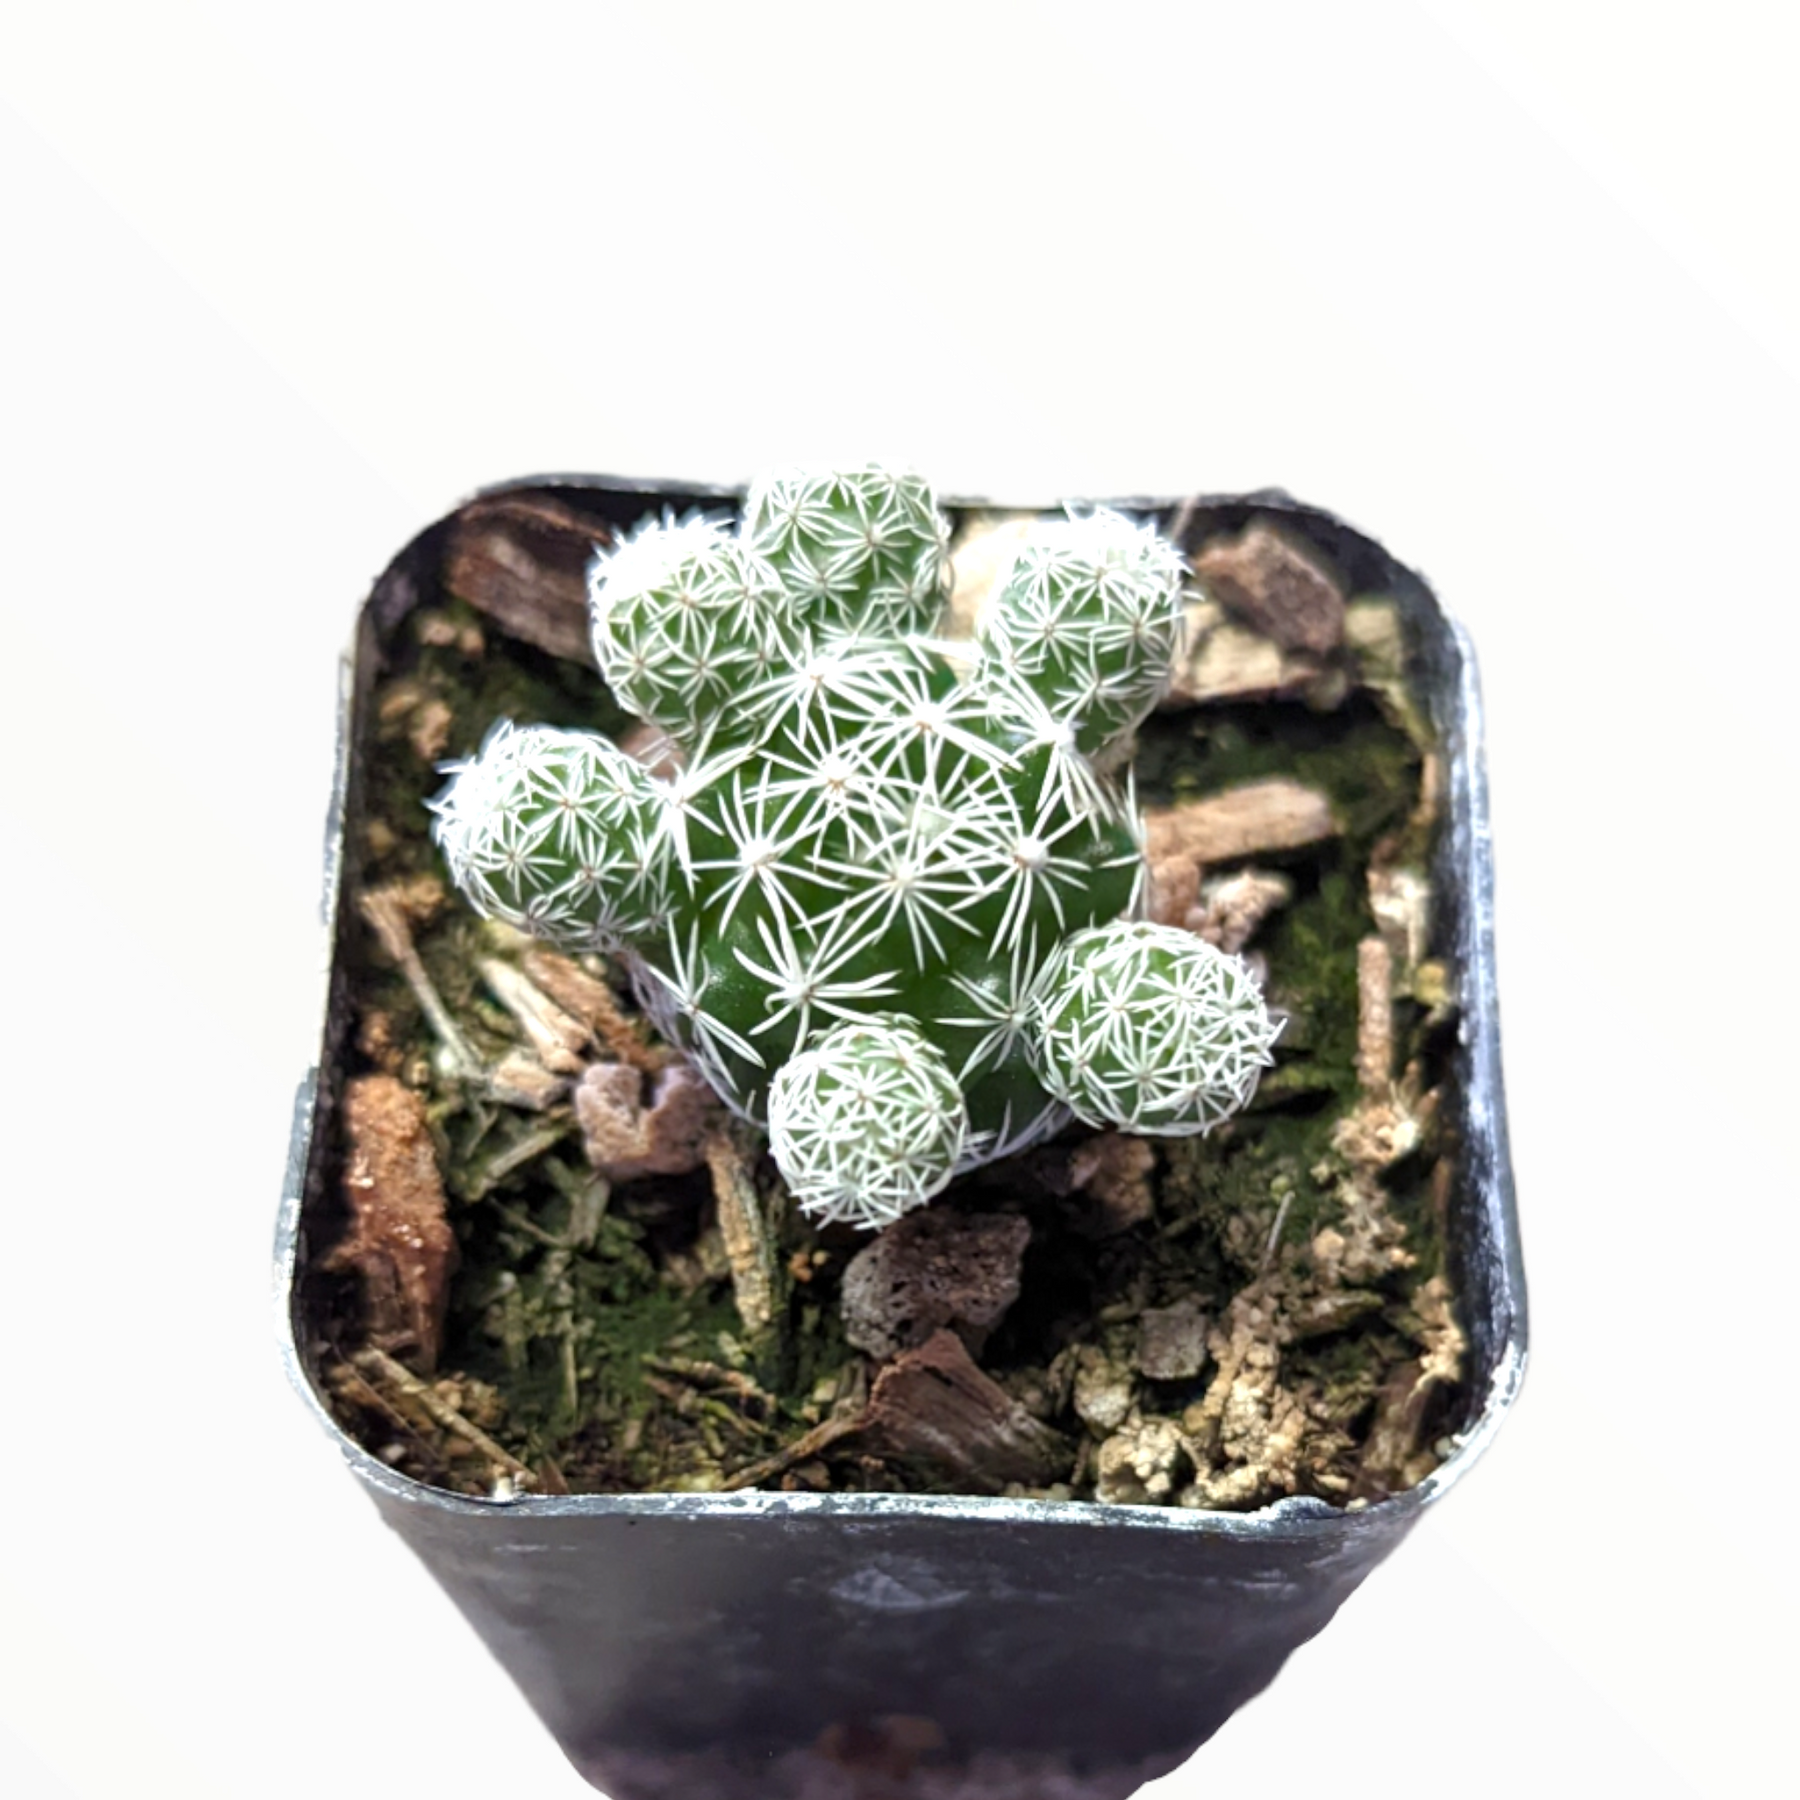 Mammillaria gracilis fragilis 'Thimble Cactus'